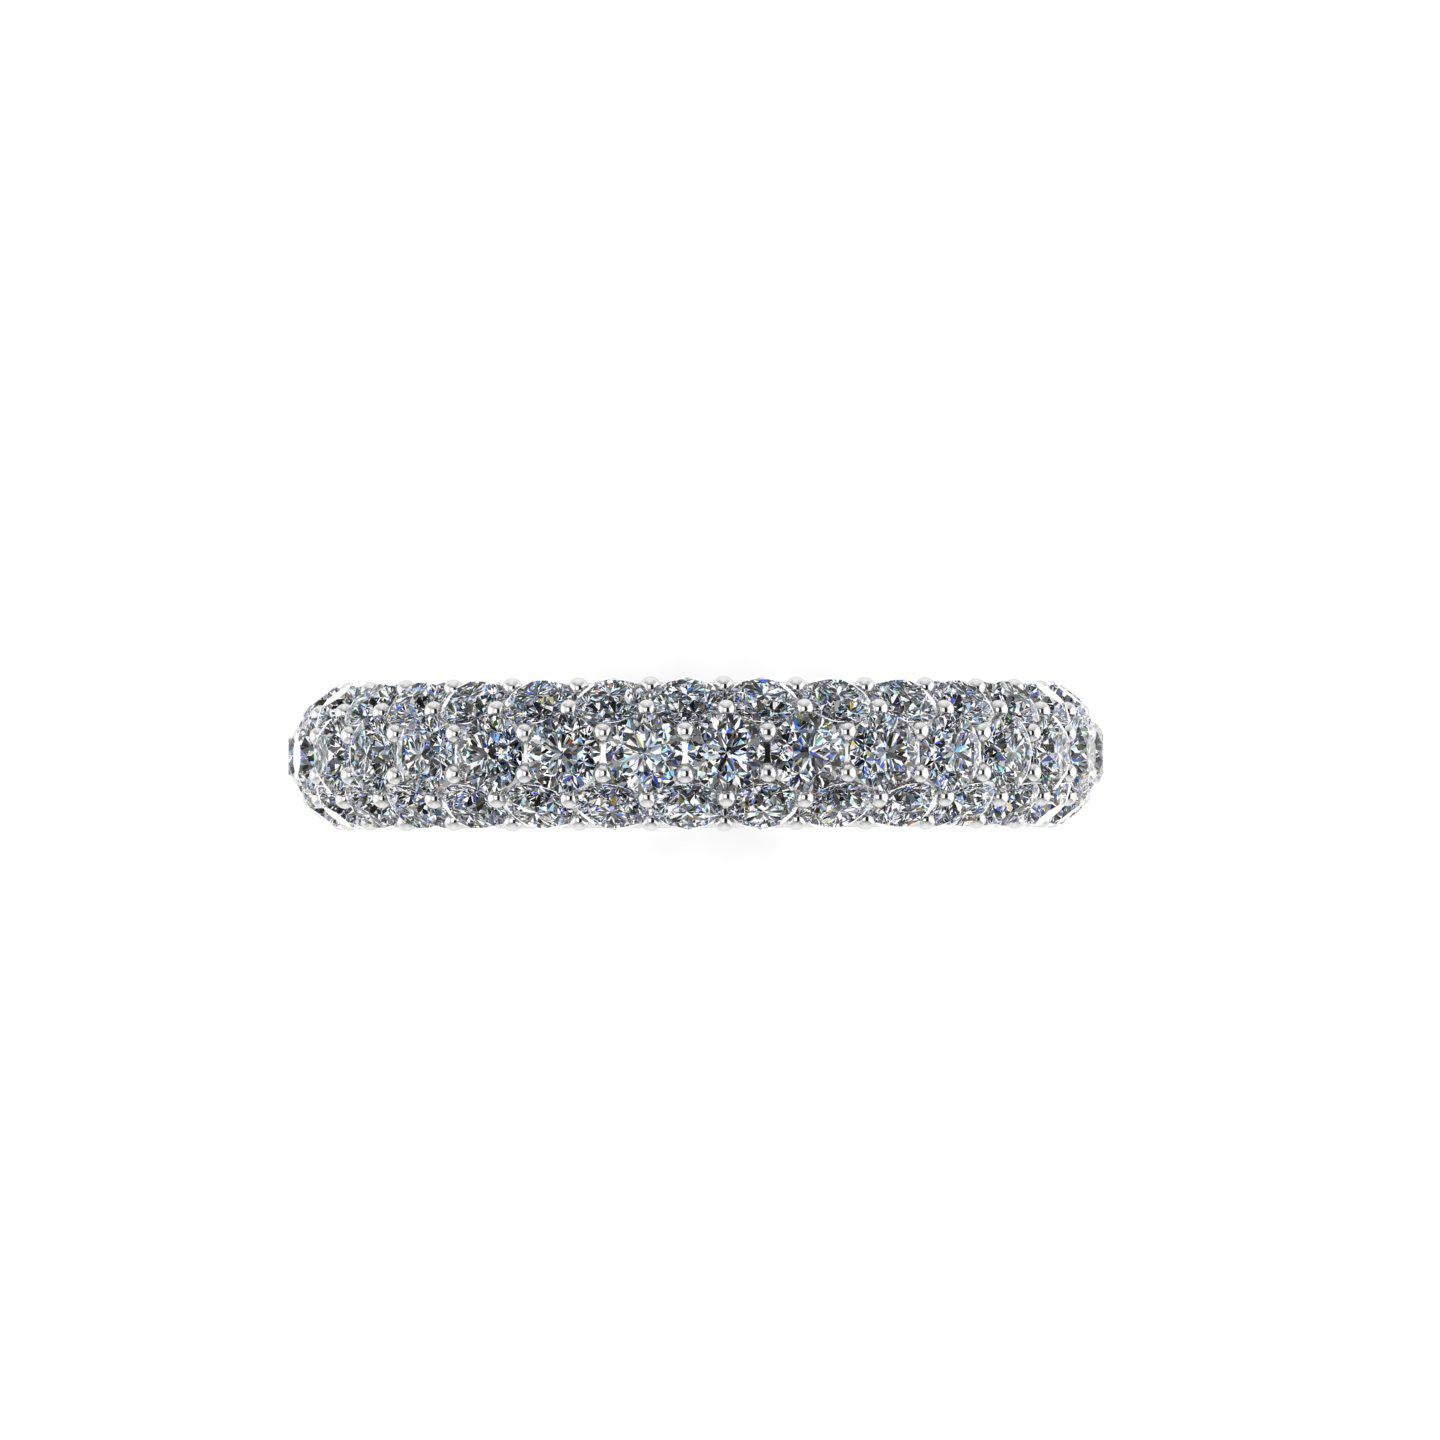 Modern 2.00 Carat White Diamond Pavé Ring in Platinum 950 For Sale